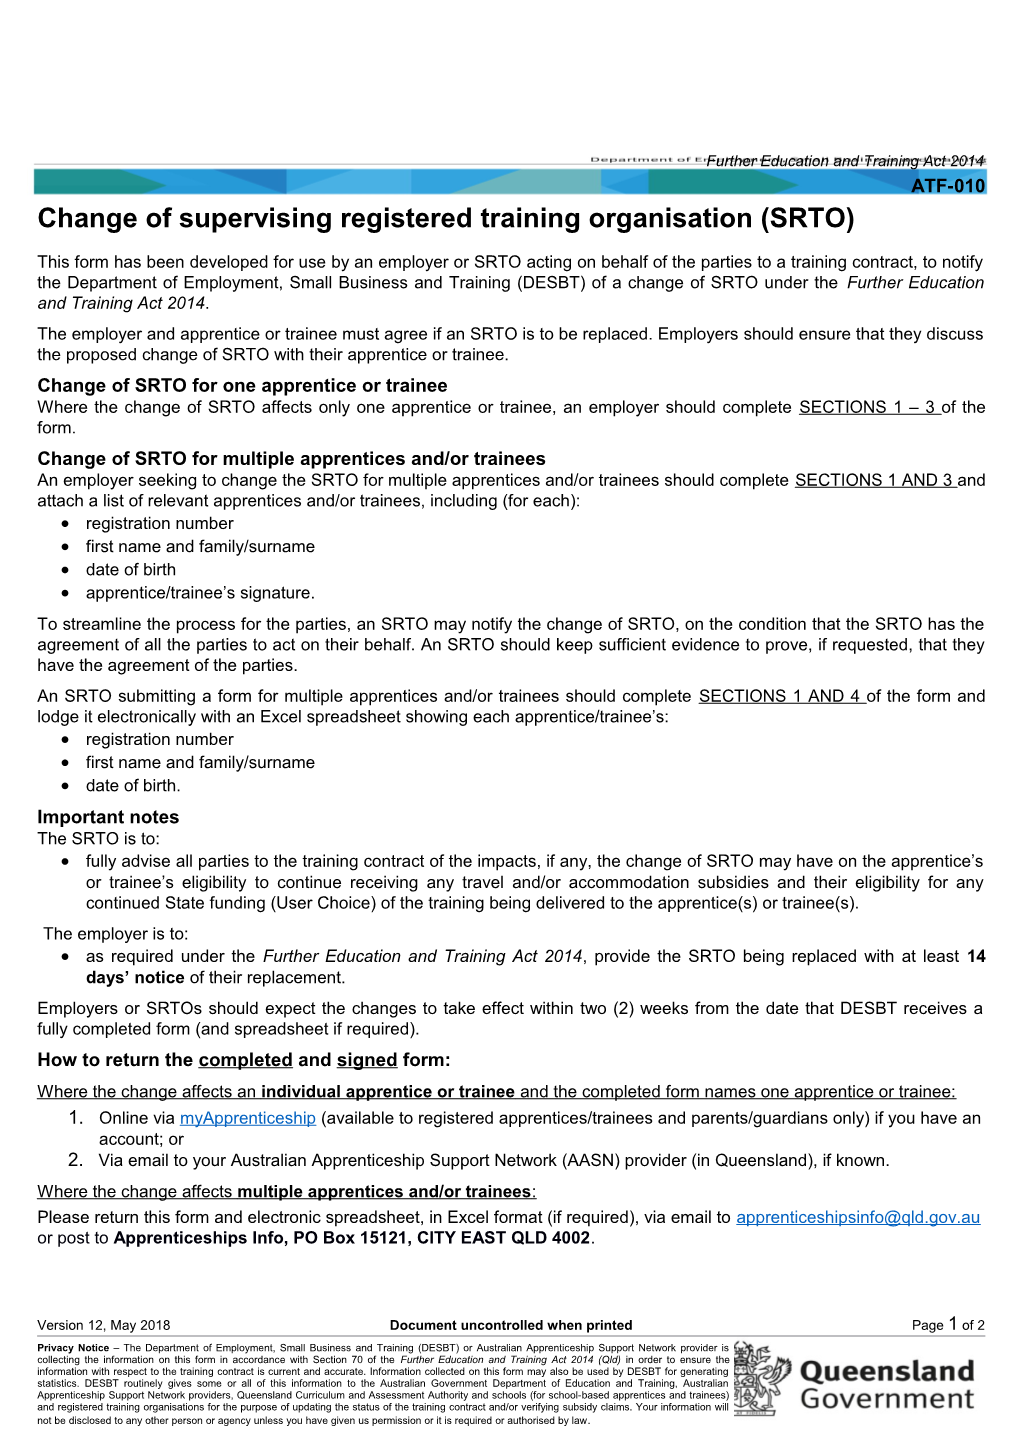 ATF-010 Change of Supervising Registered Training Organisation Form